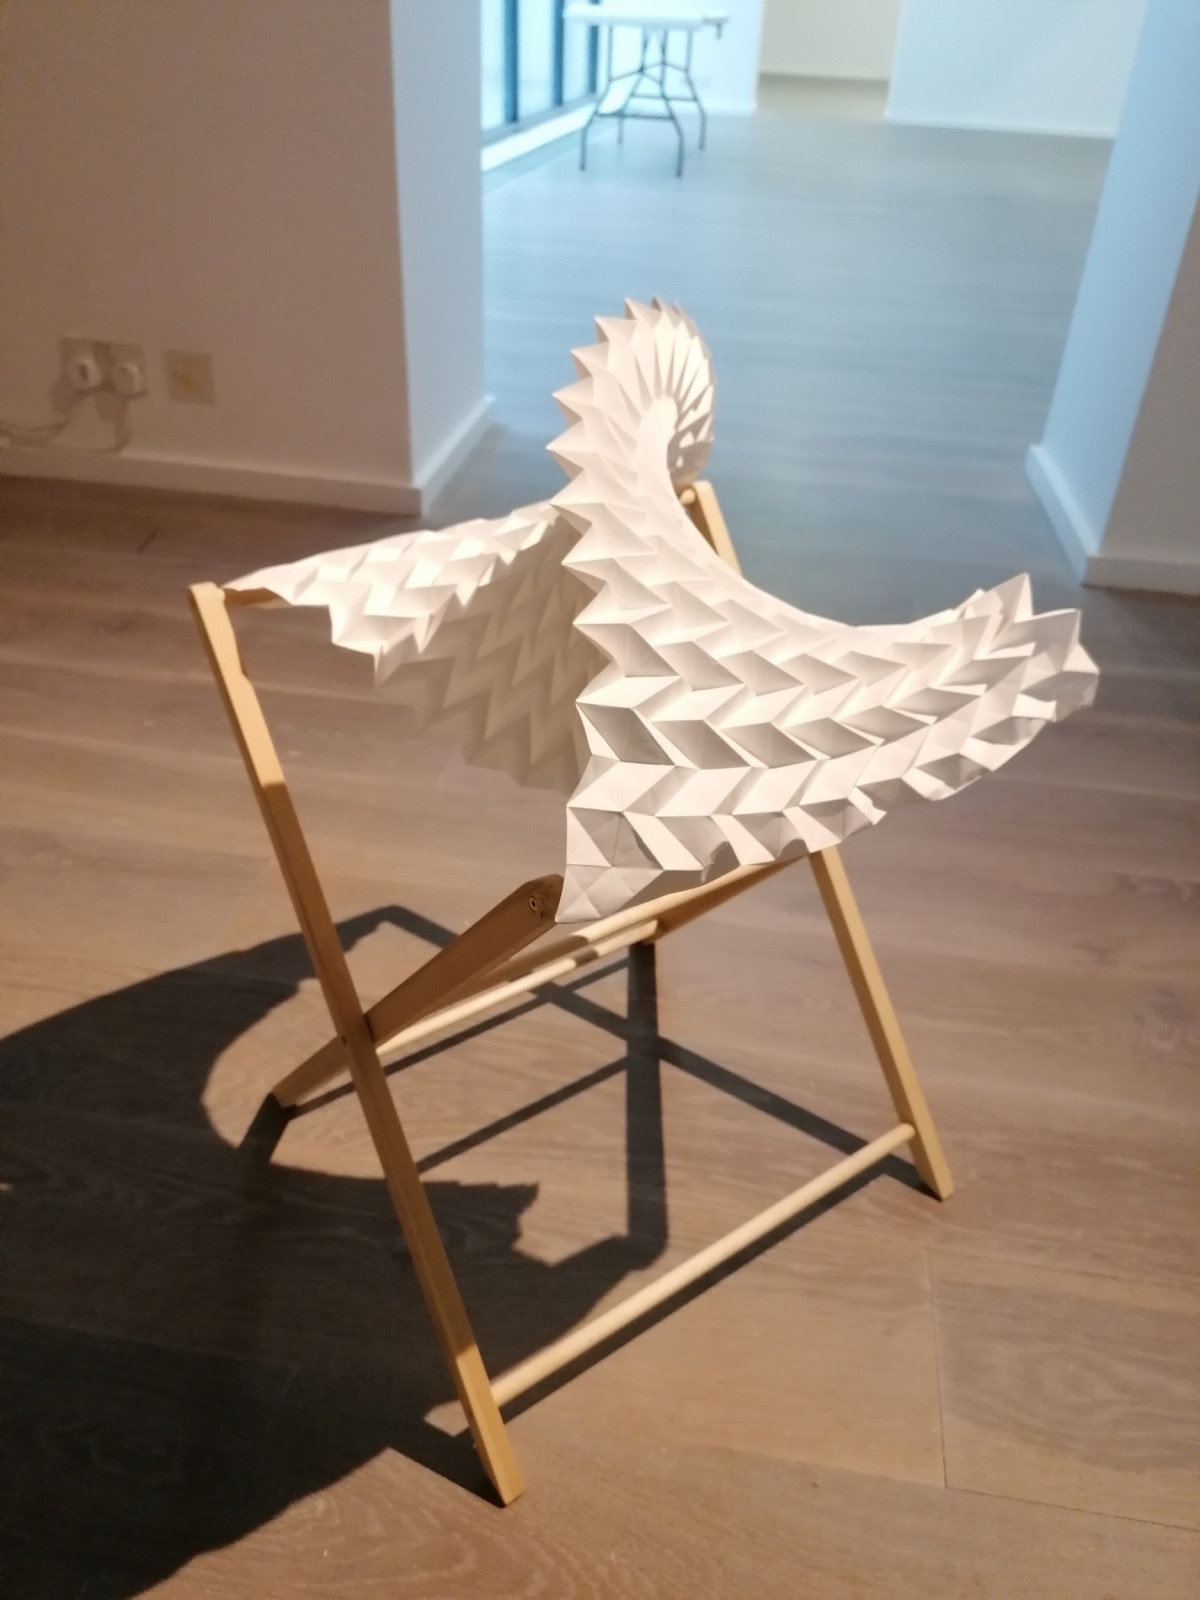 'Meta-chair' at Solstice Arts Centre, 2022